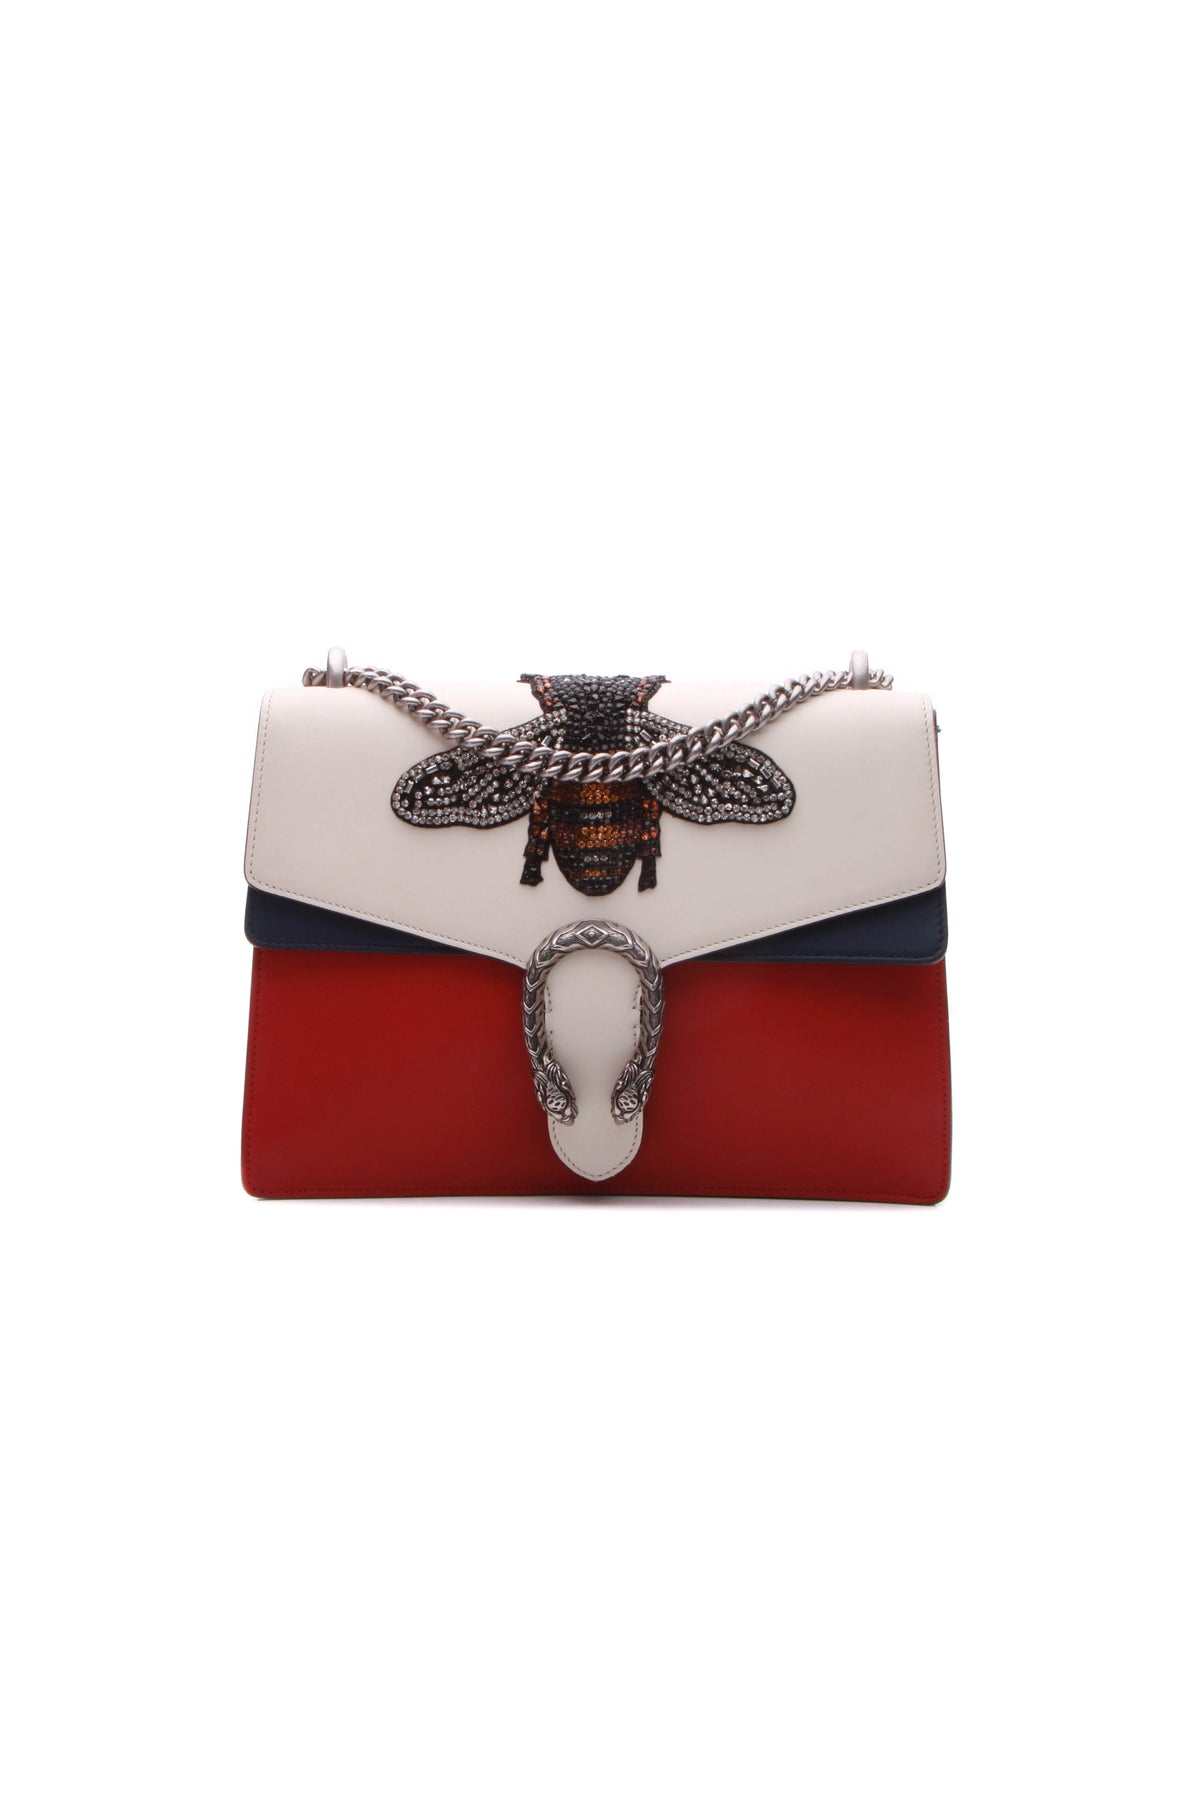 pre-owned Gucci Dionysus Shoulder Mini Bag Black Style #421970 retail$2600  | eBay